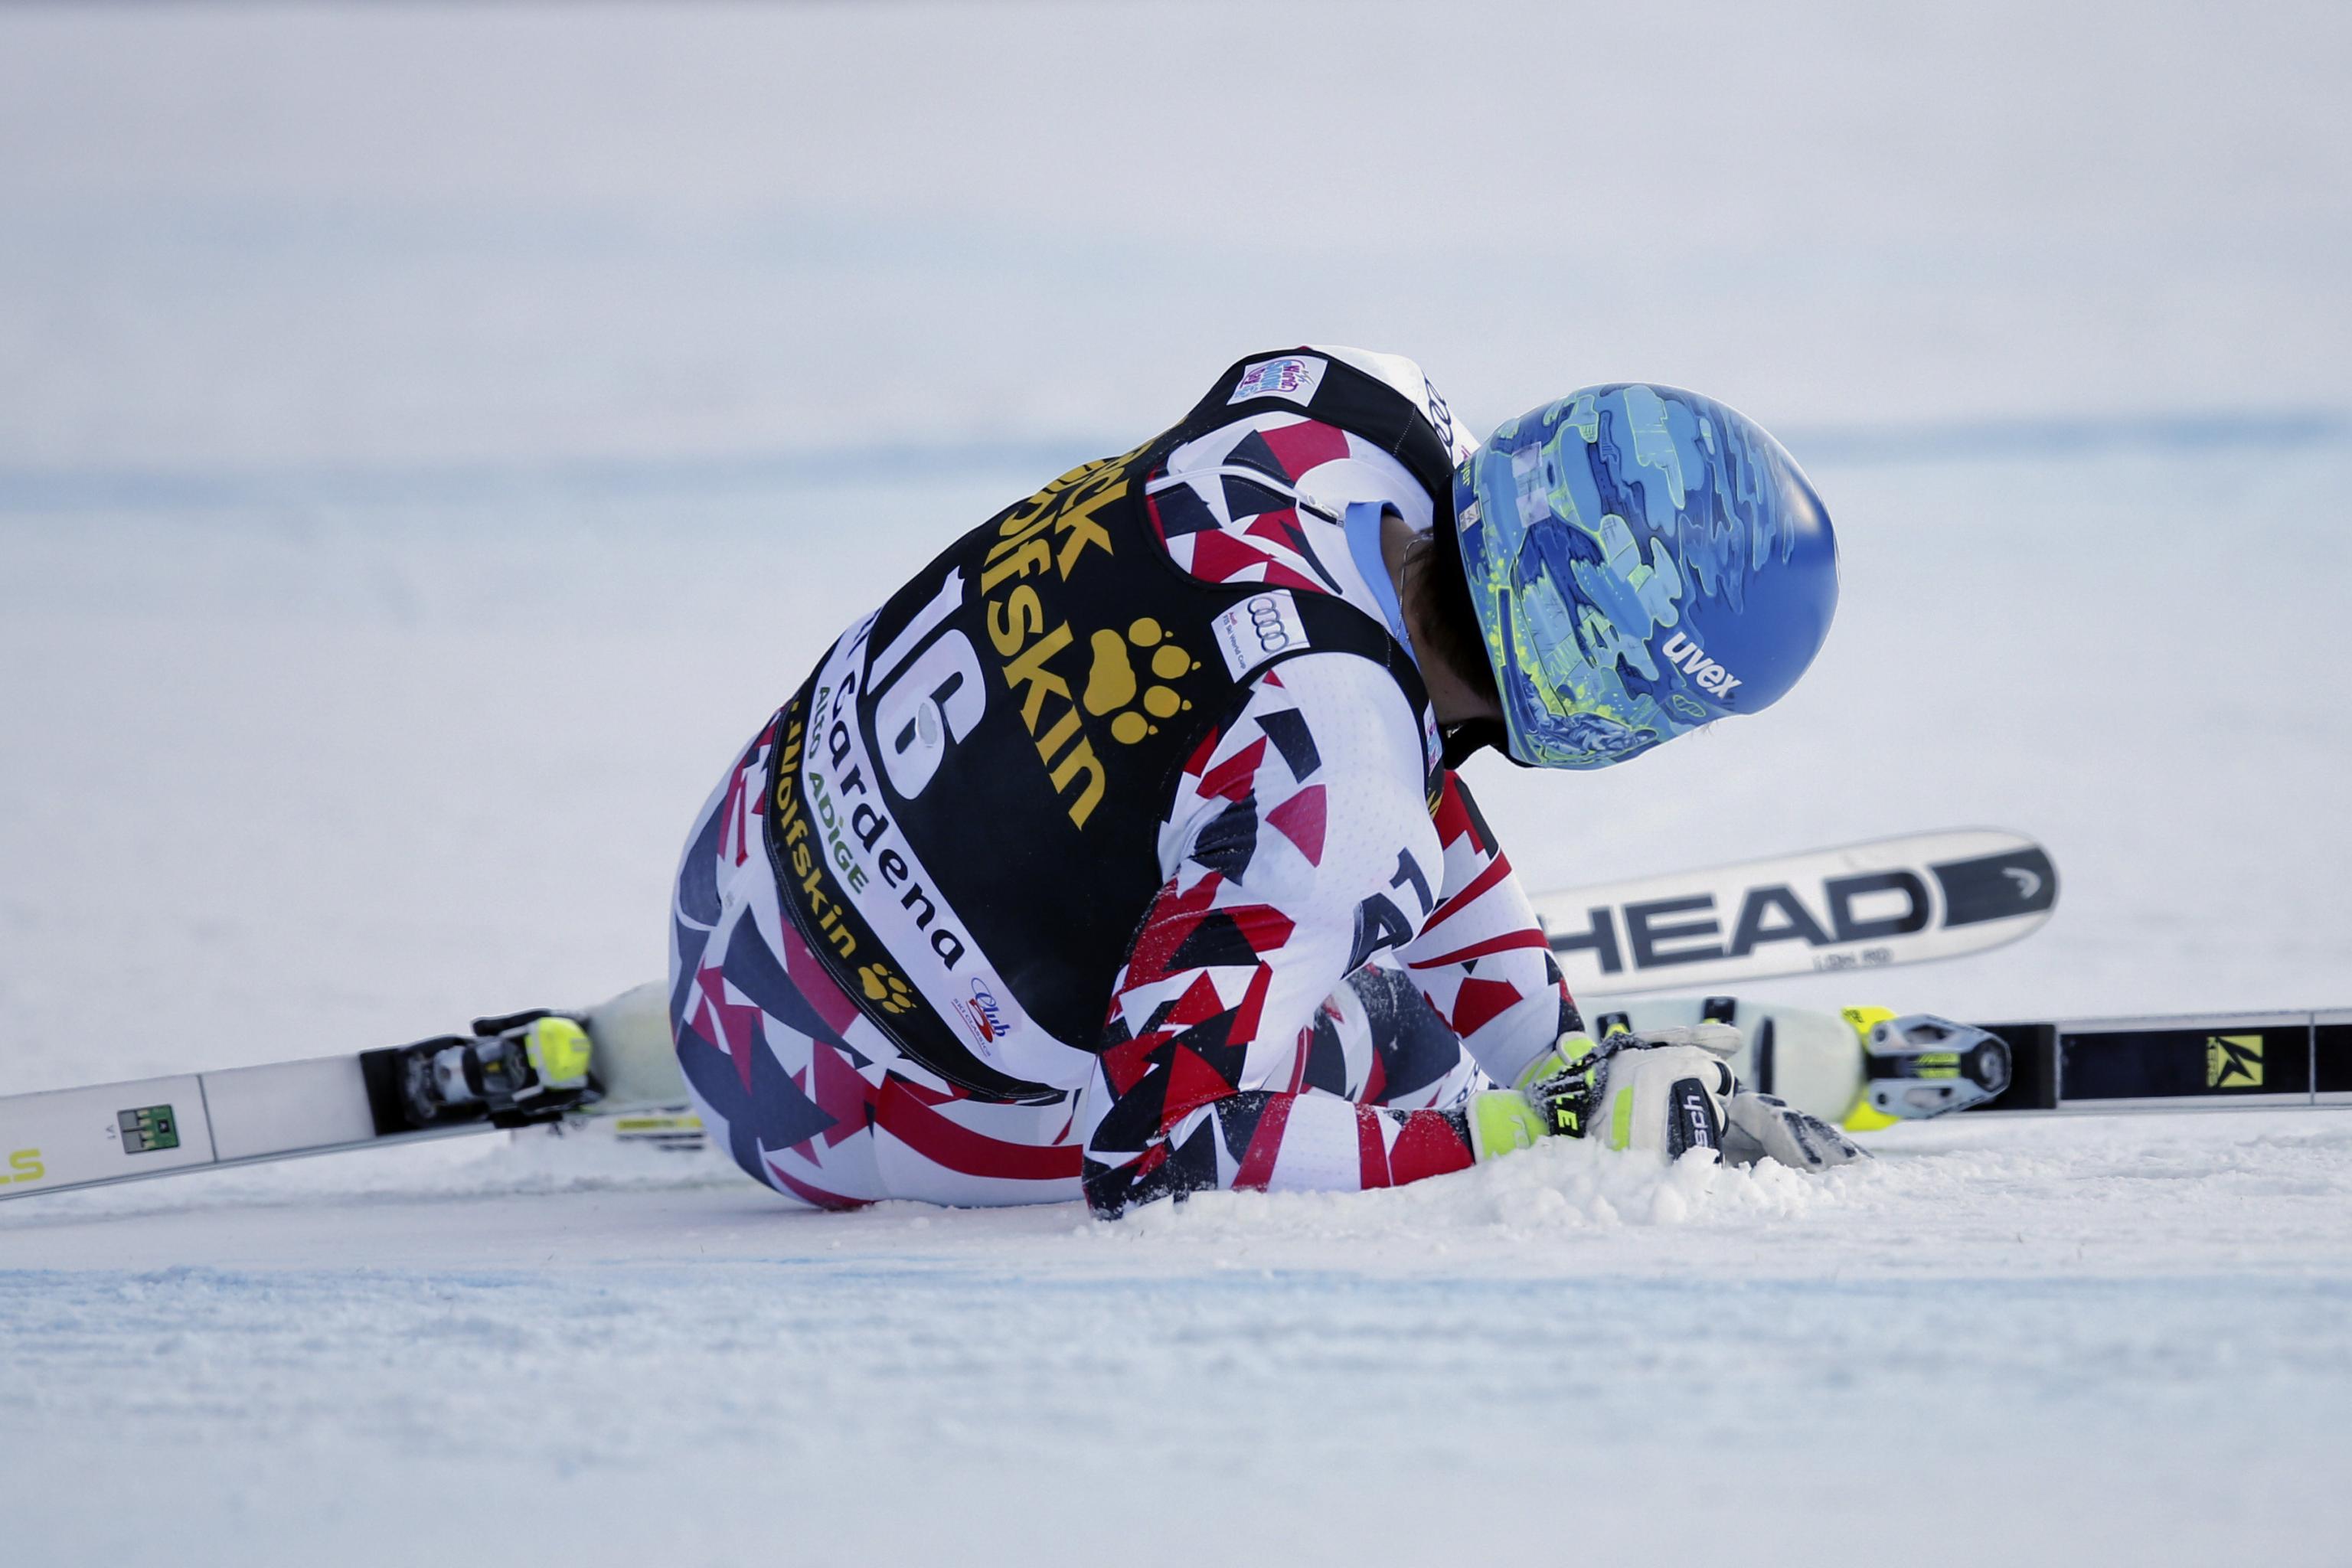 Matthias Mayer Injury Updates On Skier S Status After Crash Bleacher Report Latest News Videos And Highlights